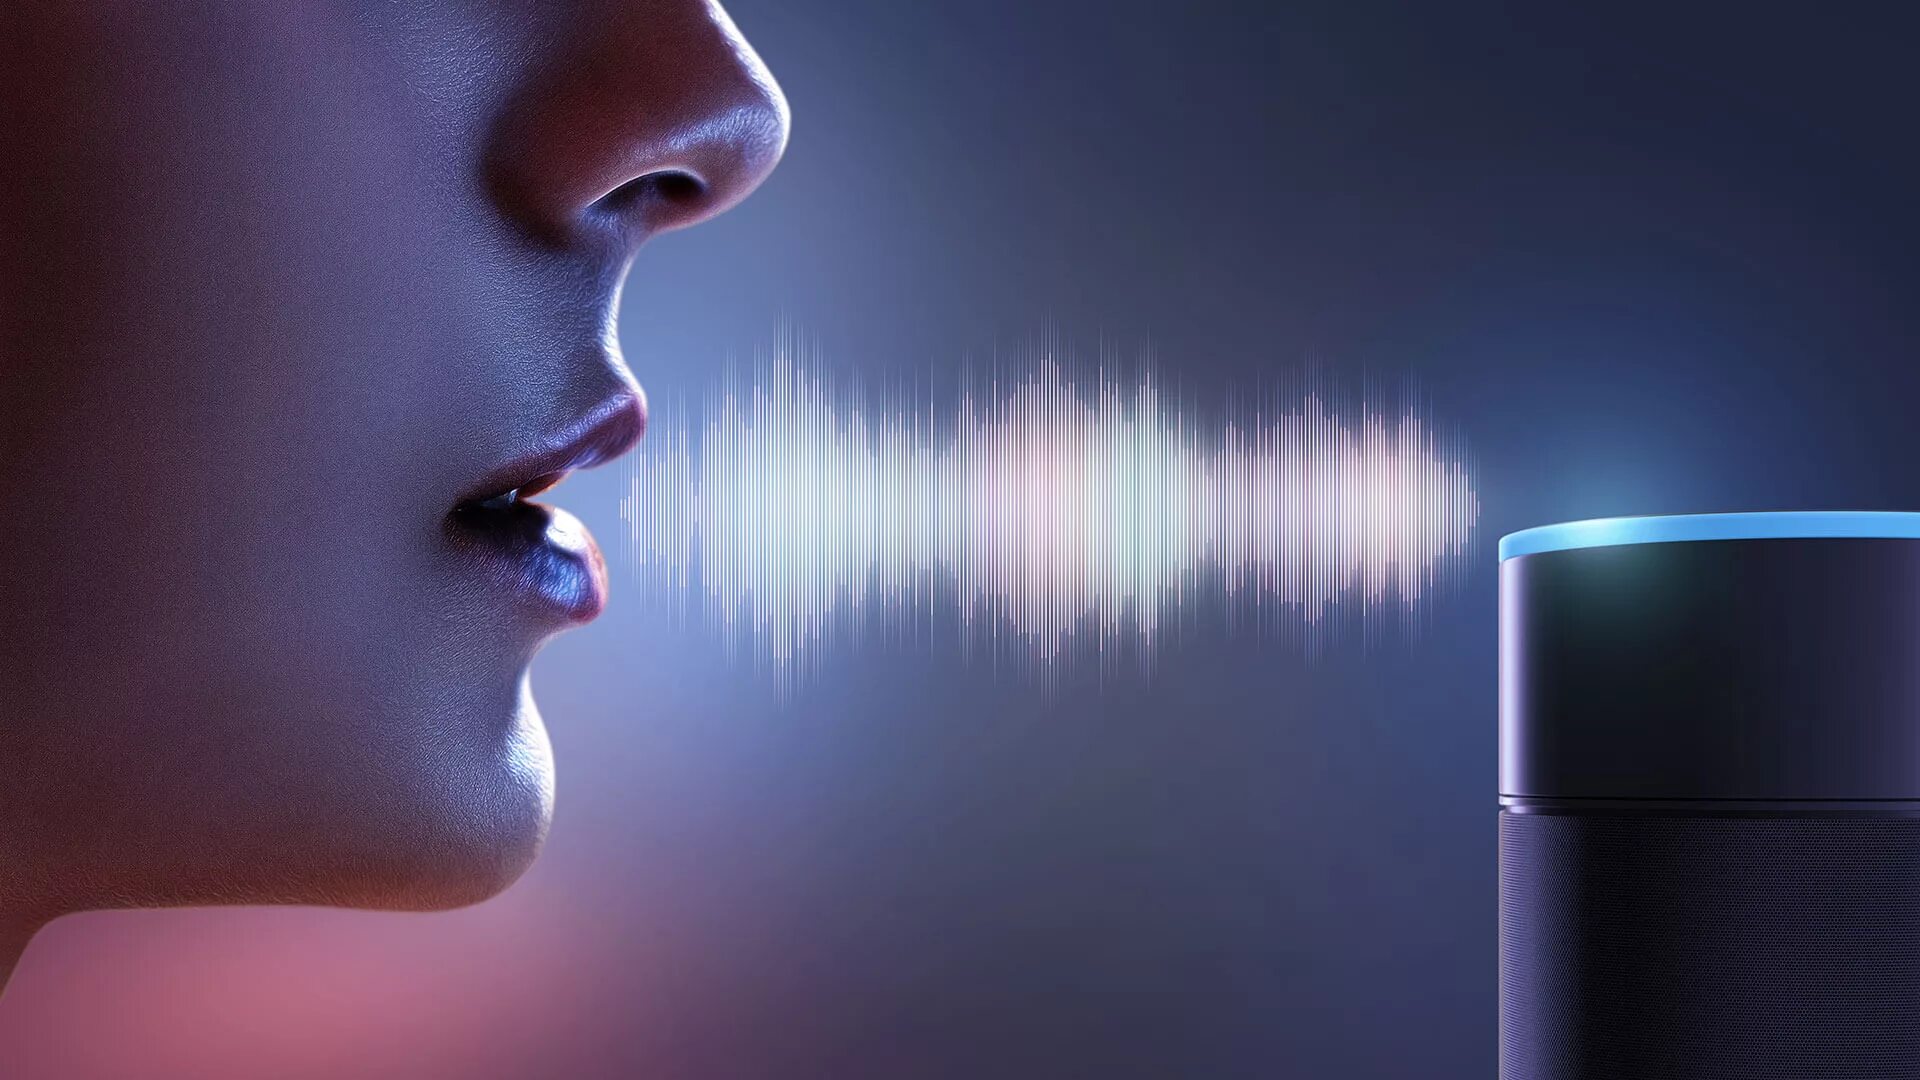 Текст в голос ии. Идентификация по голосу. Распознавание речи. Биометрическая аутентификация по голосу. Биометрический сканер голоса.